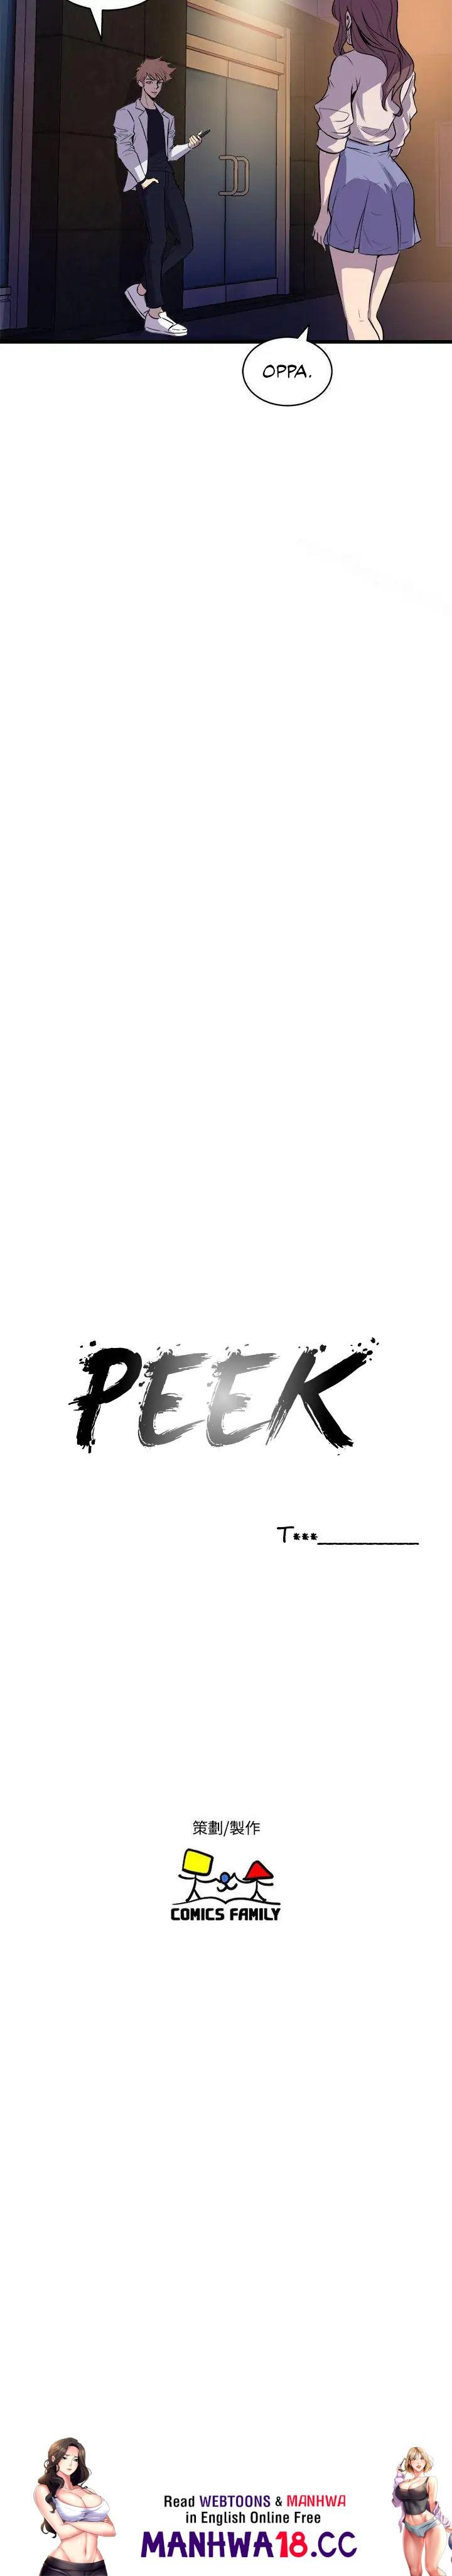 Peek - Chapter 15 Page 26